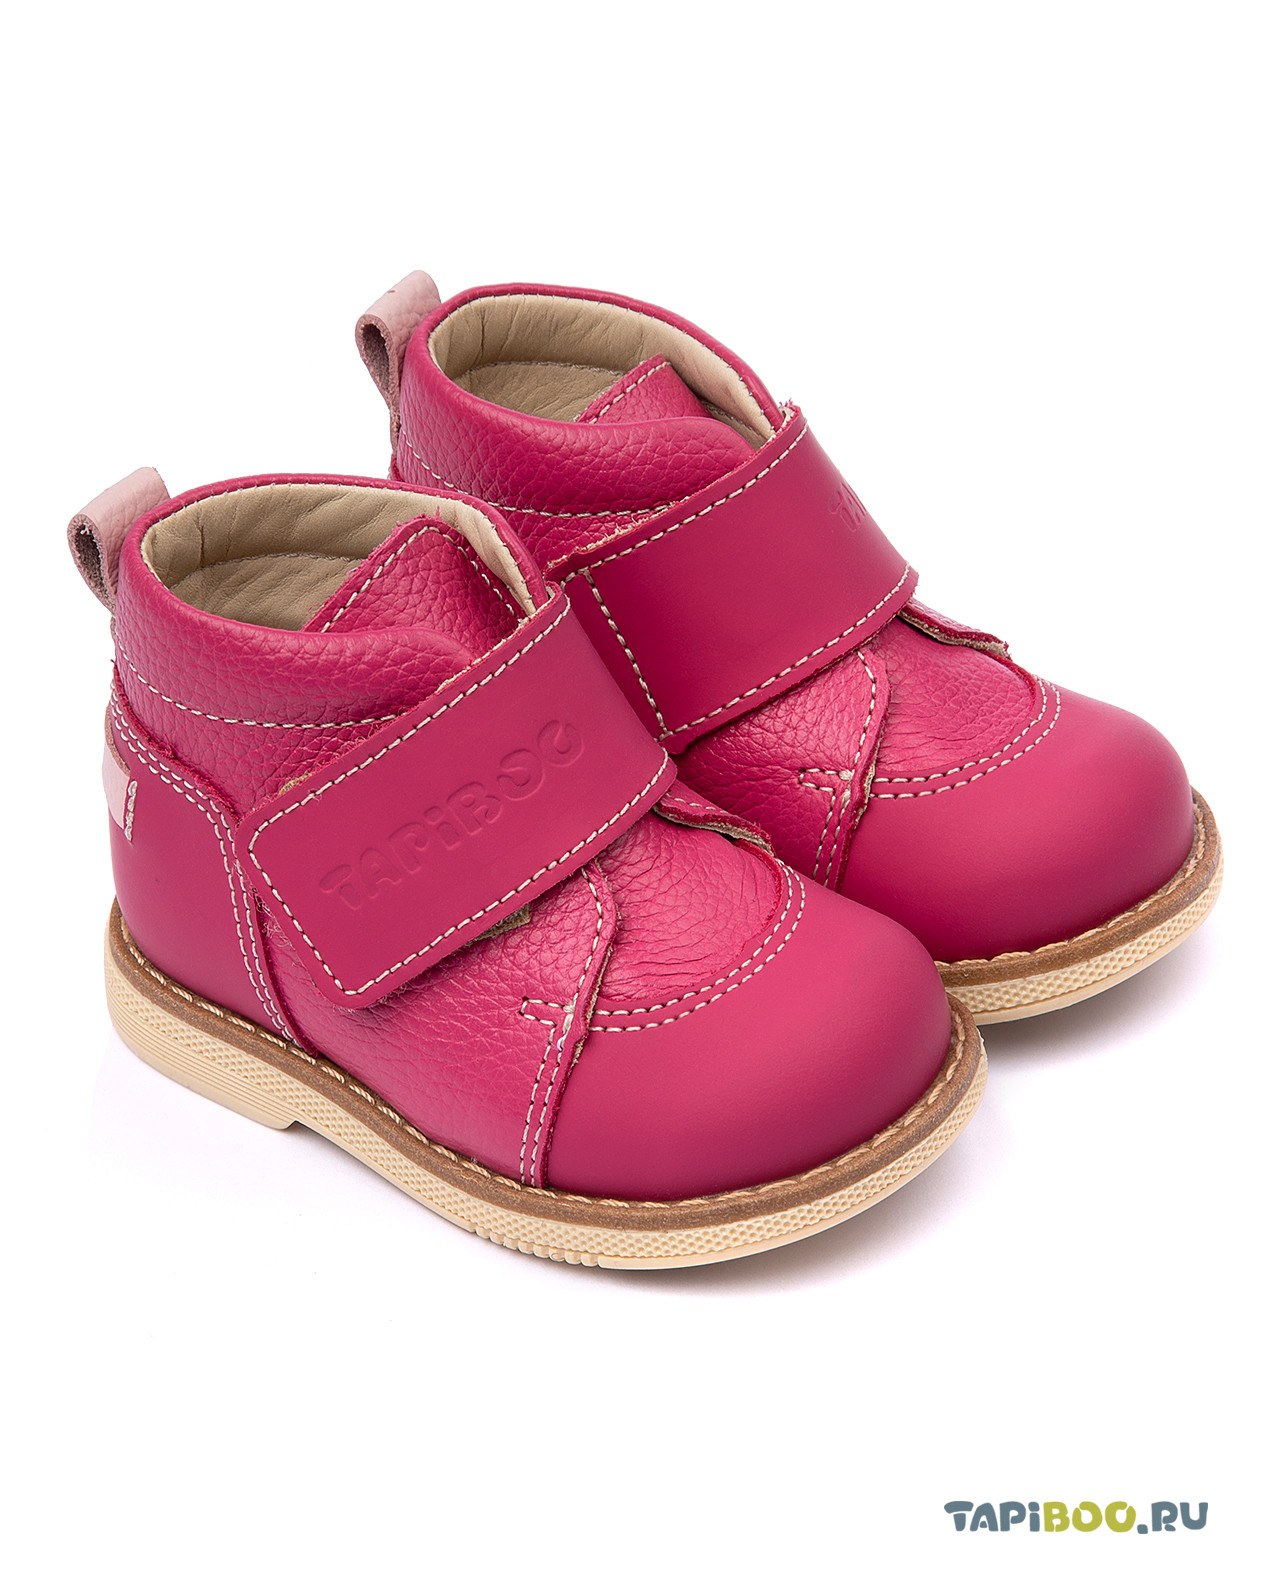 Ботинки детские Tapiboo ФУКСИЯ (71693, 20) ботинки детские 24015 фуксия малиновая радуга 2021 р18